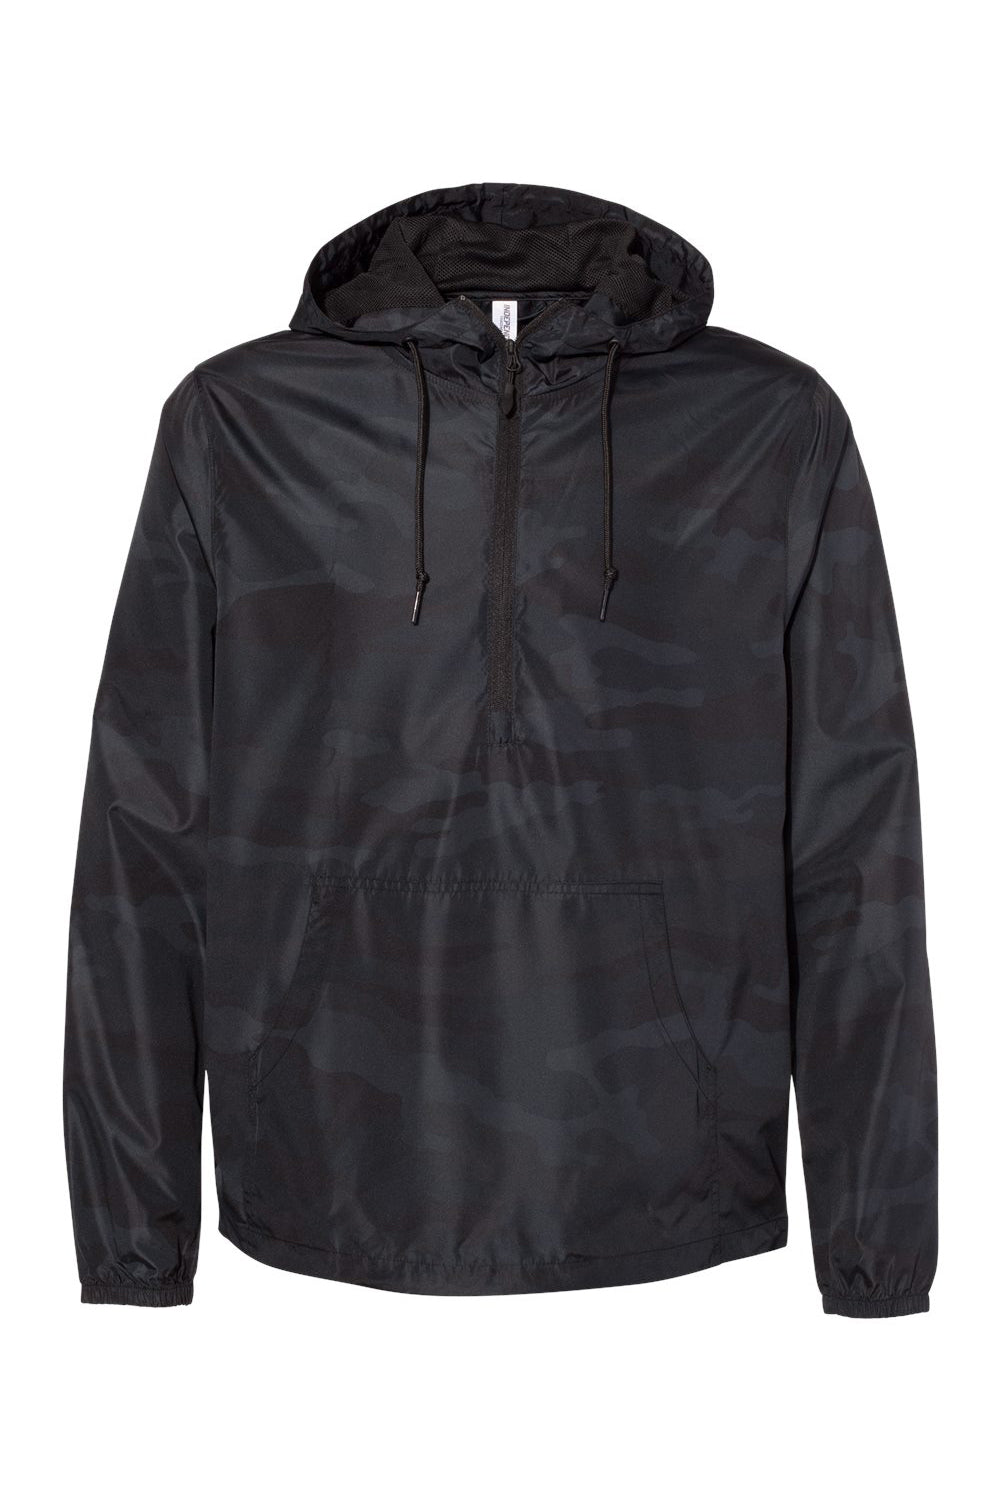 Independent Trading Co. EXP54LWP Mens 1/4 Zip Windbreaker Hooded Jacket Black Camo Flat Front